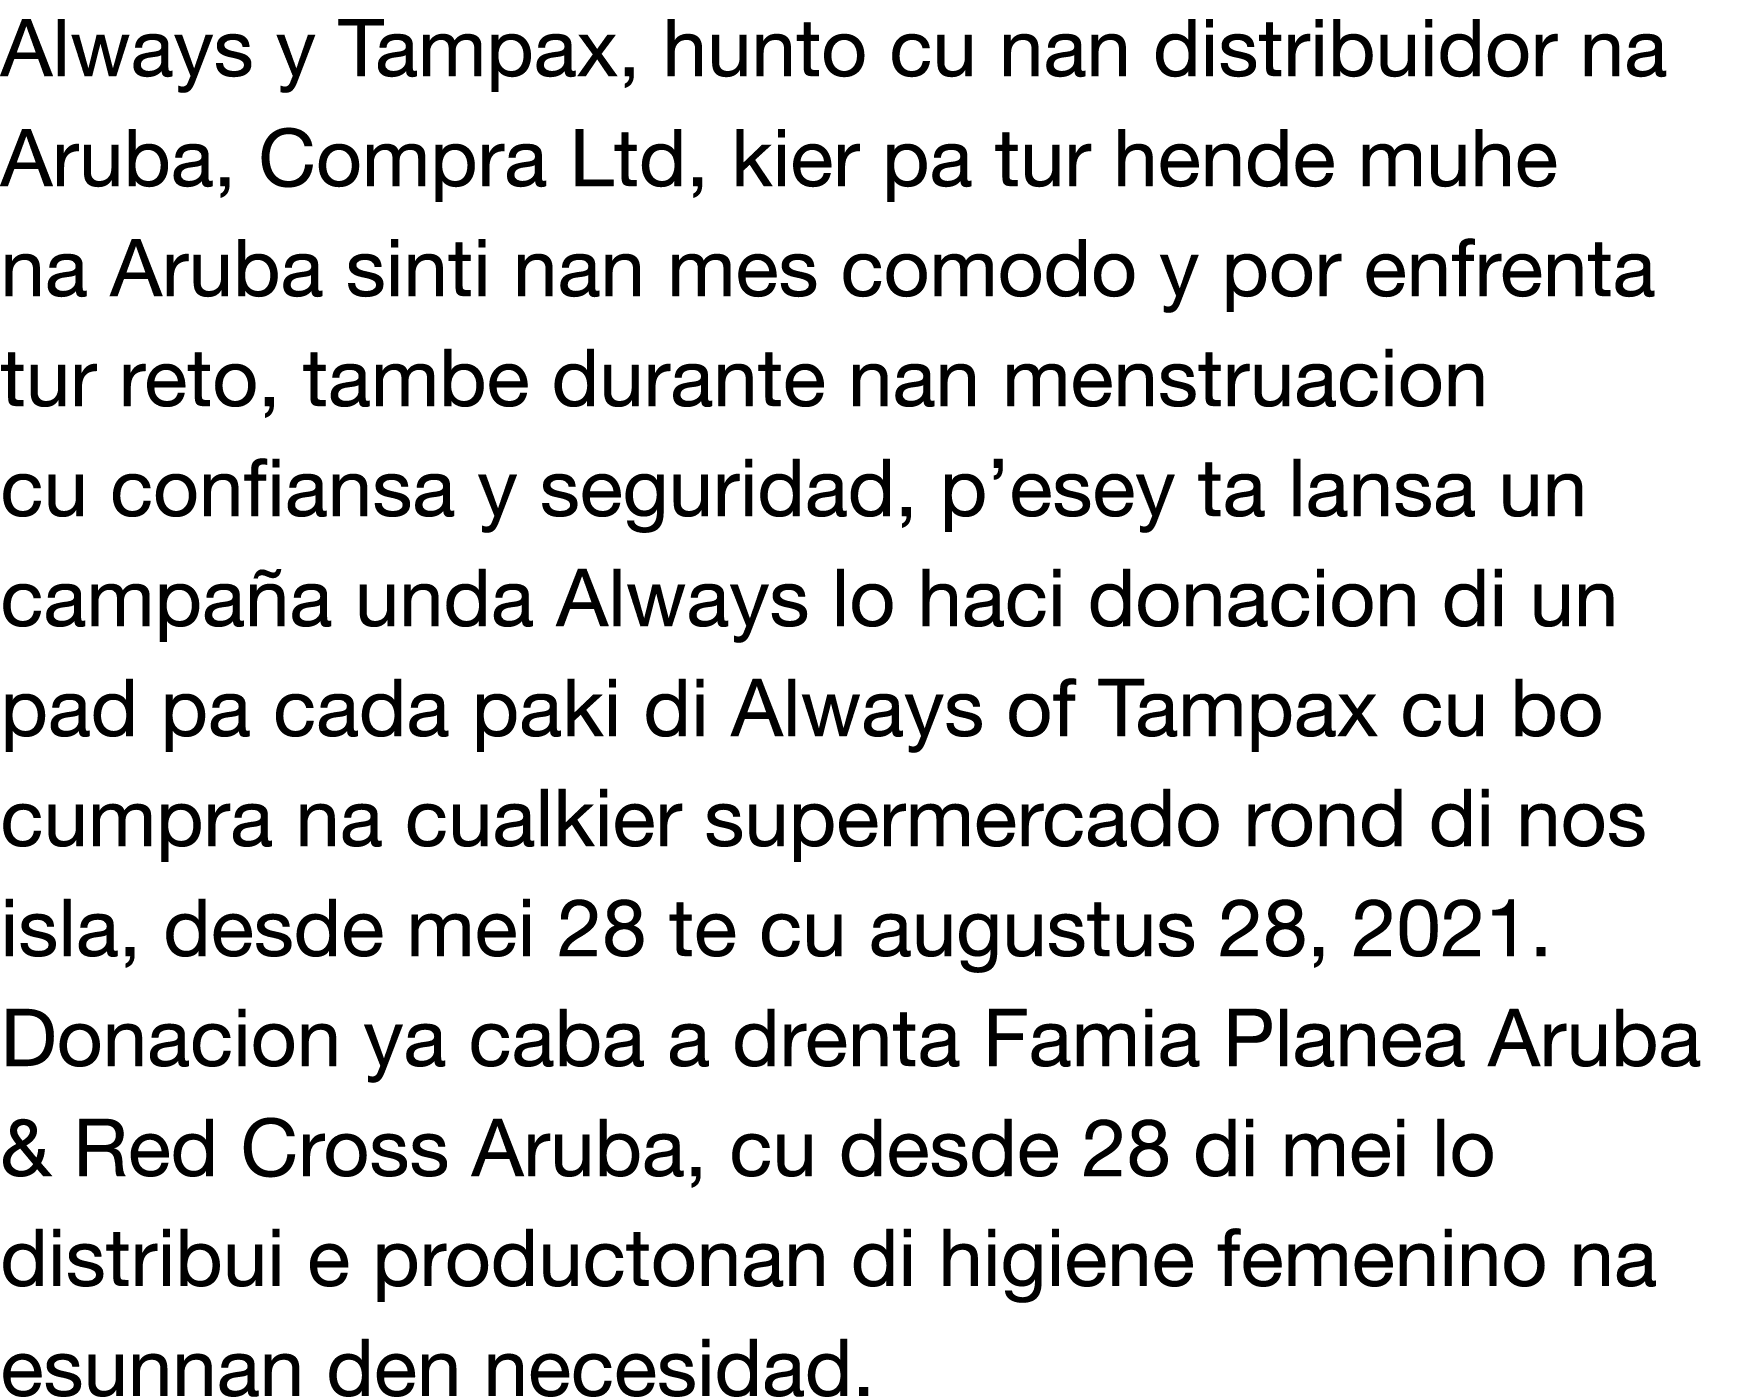 Always y Tampax, hunto cu nan distribuidor na Aruba, Compra Ltd, kier pa tur hende muhe na Aruba sinti nan mes comodo   